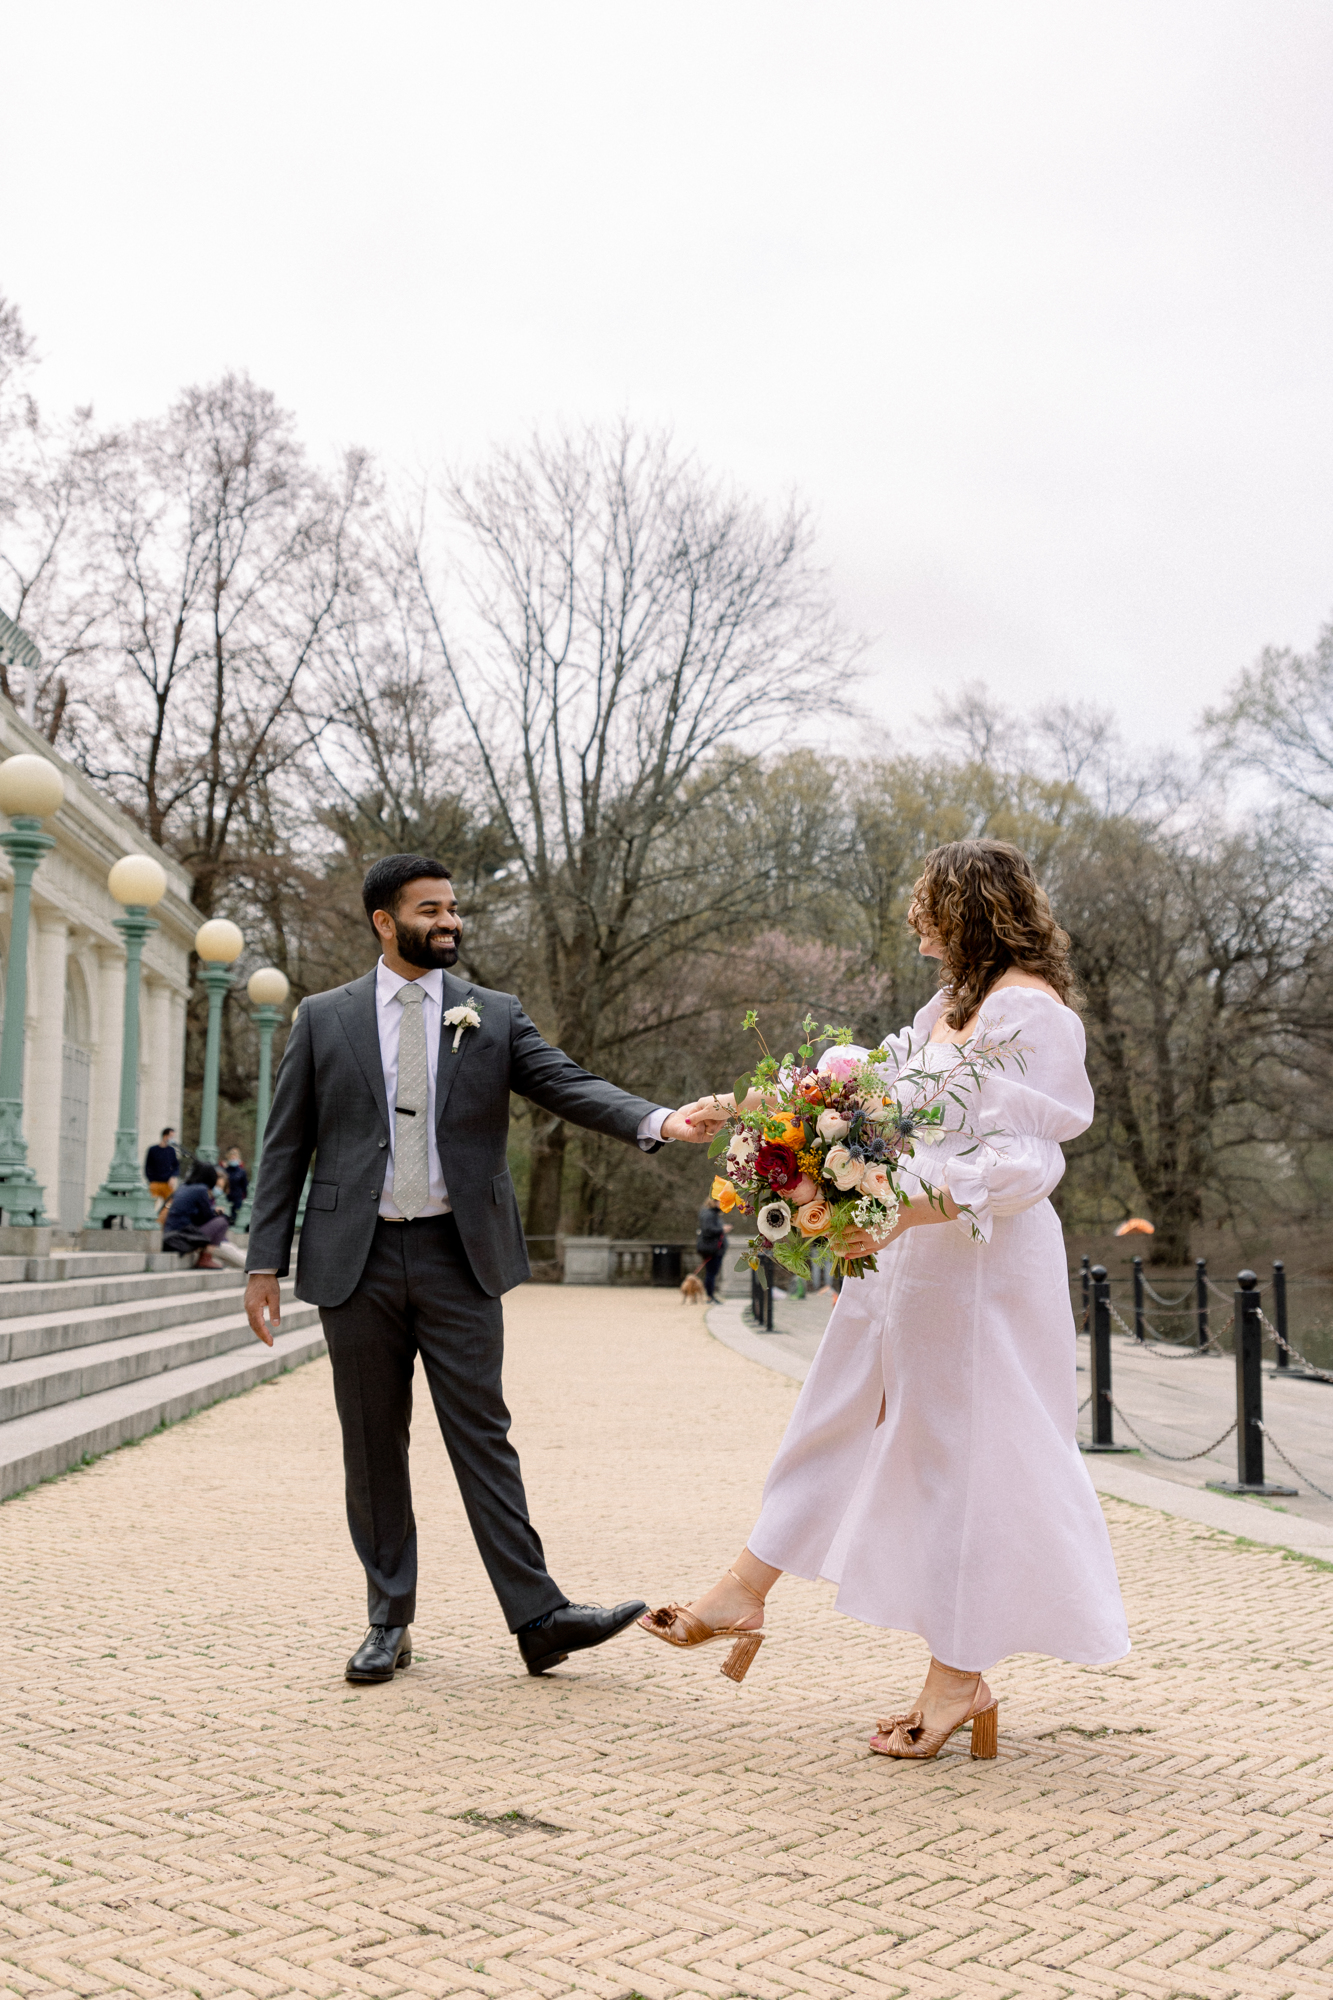 Stylish Prospect Park Wedding Photos with Springtime Cherry Blossoms